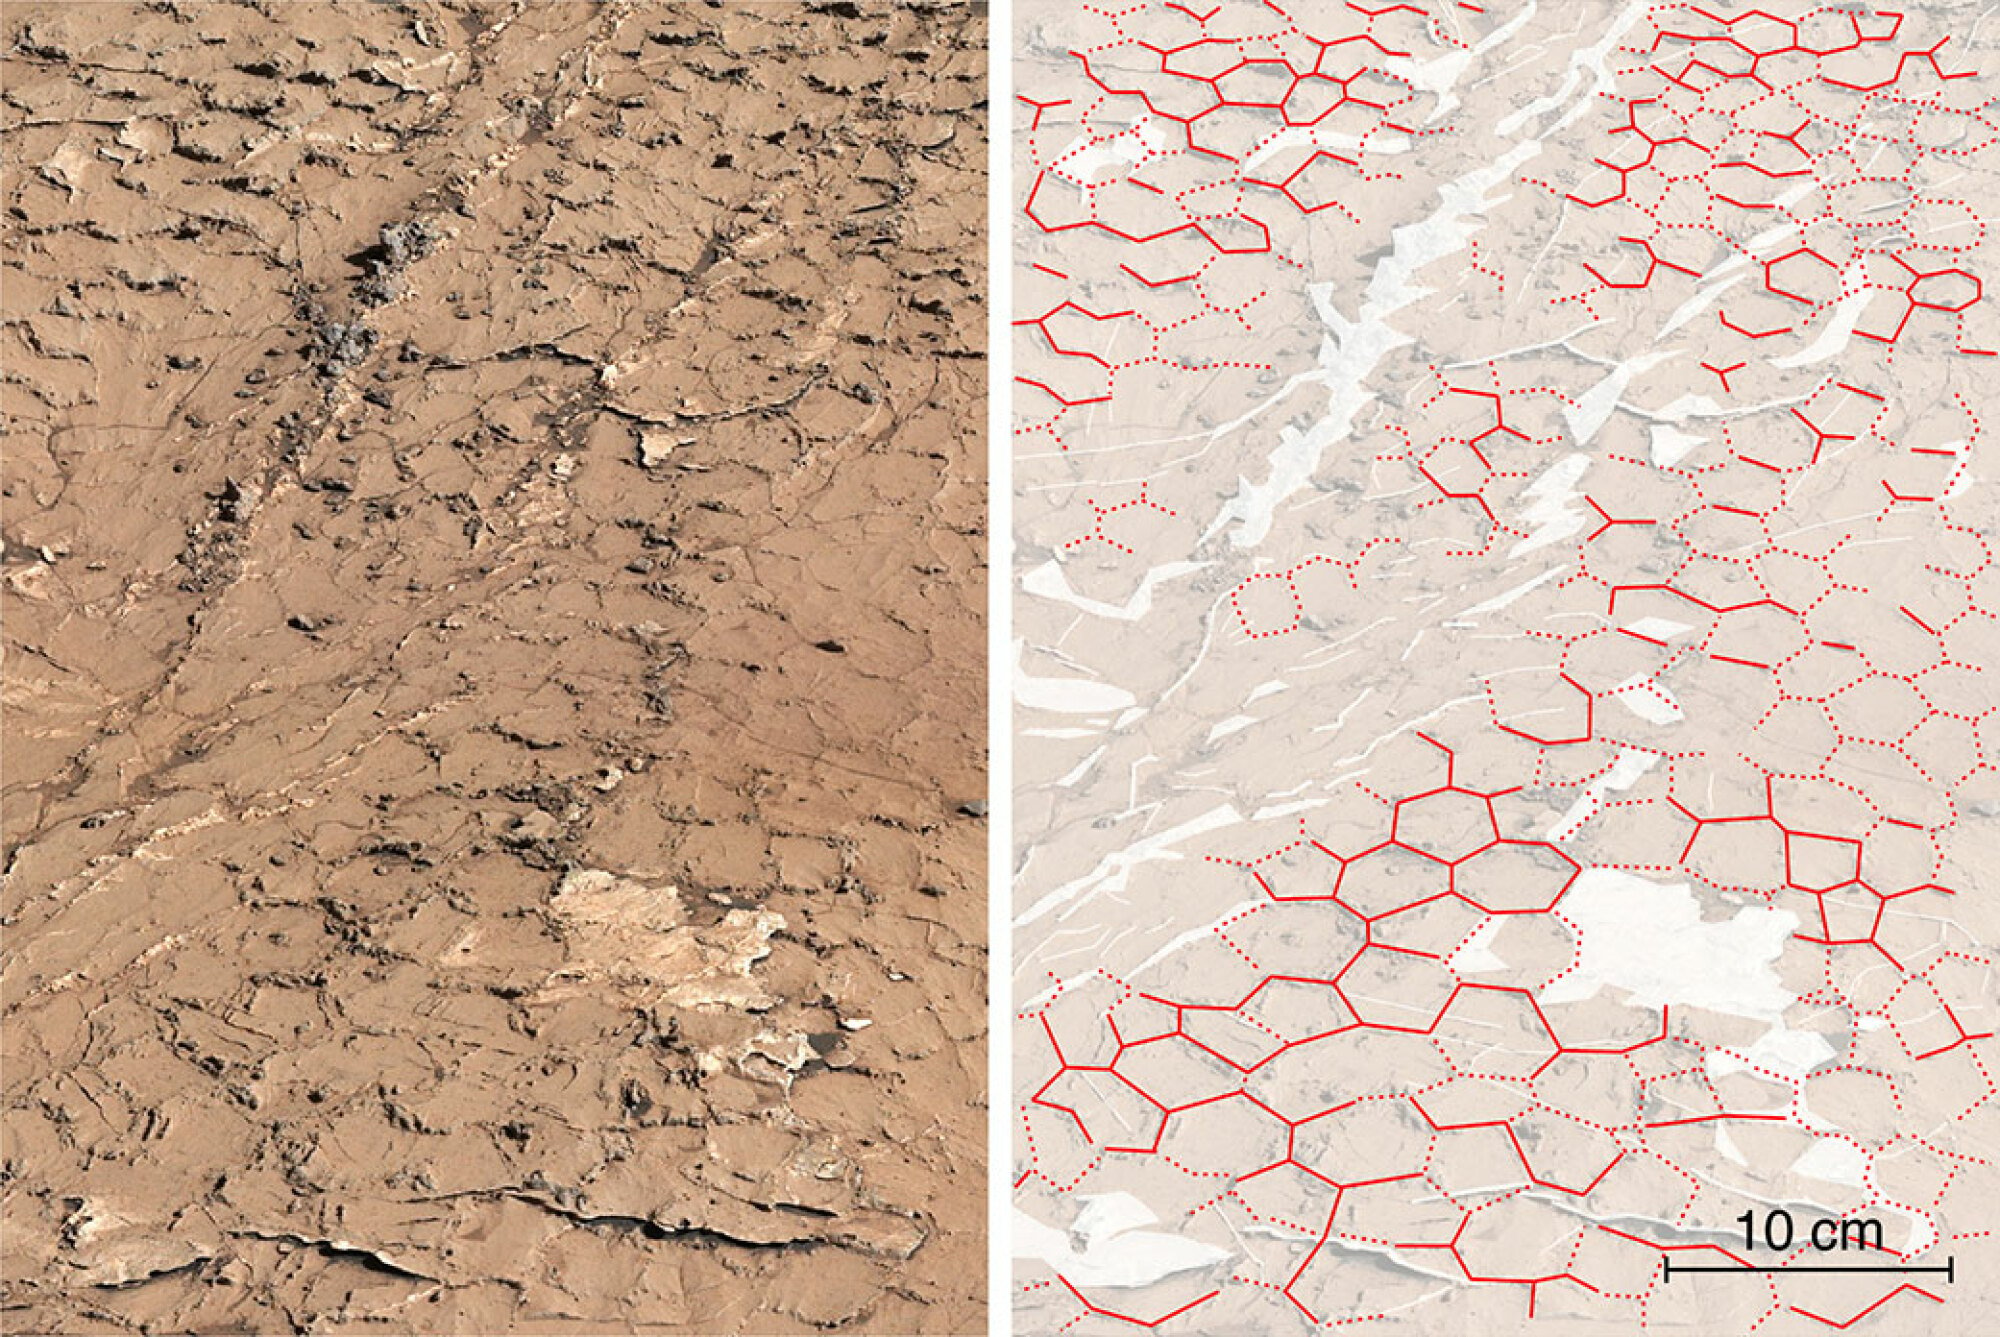 Studying hexagonal mud cracks on Mars